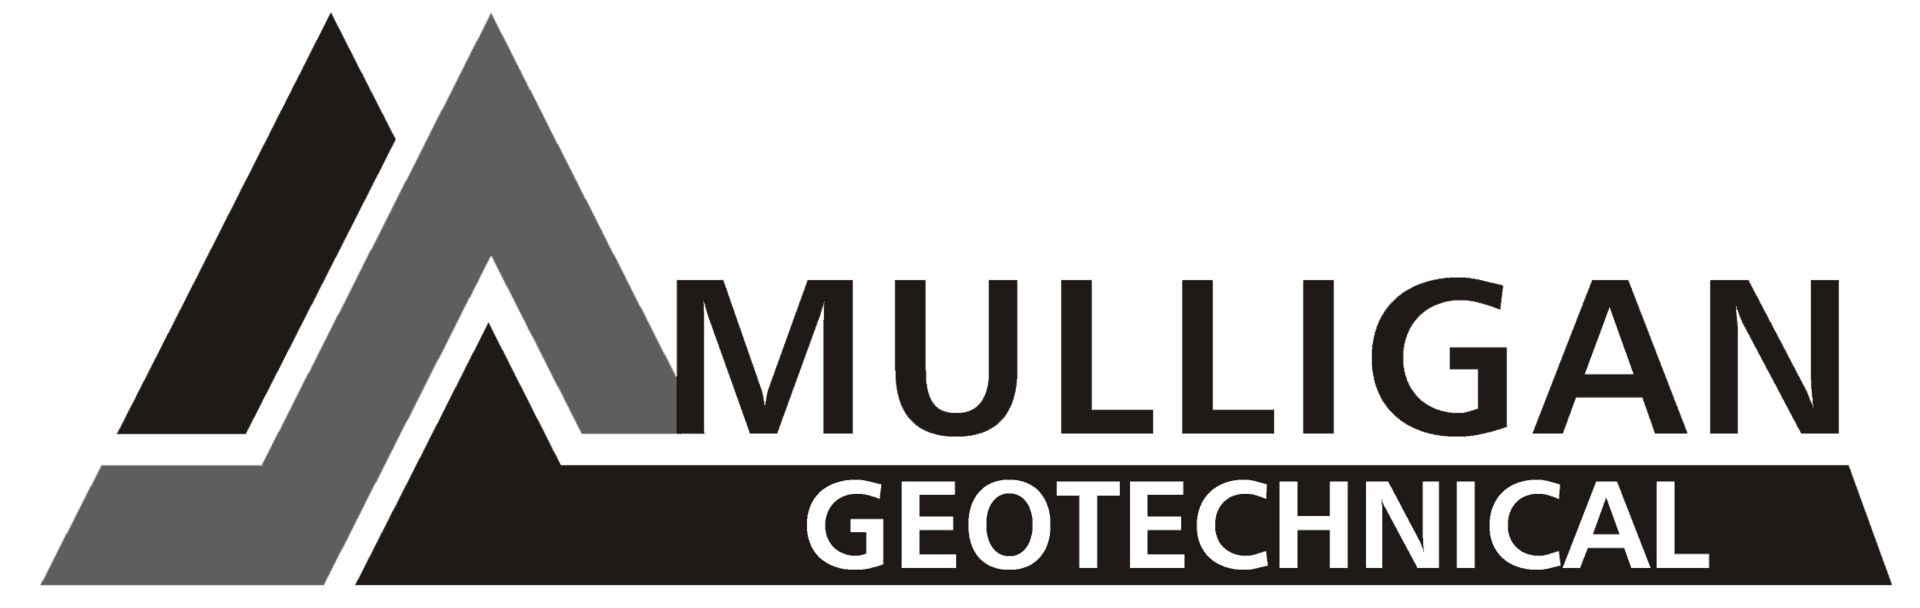 Mulligan Geotechnical Logo